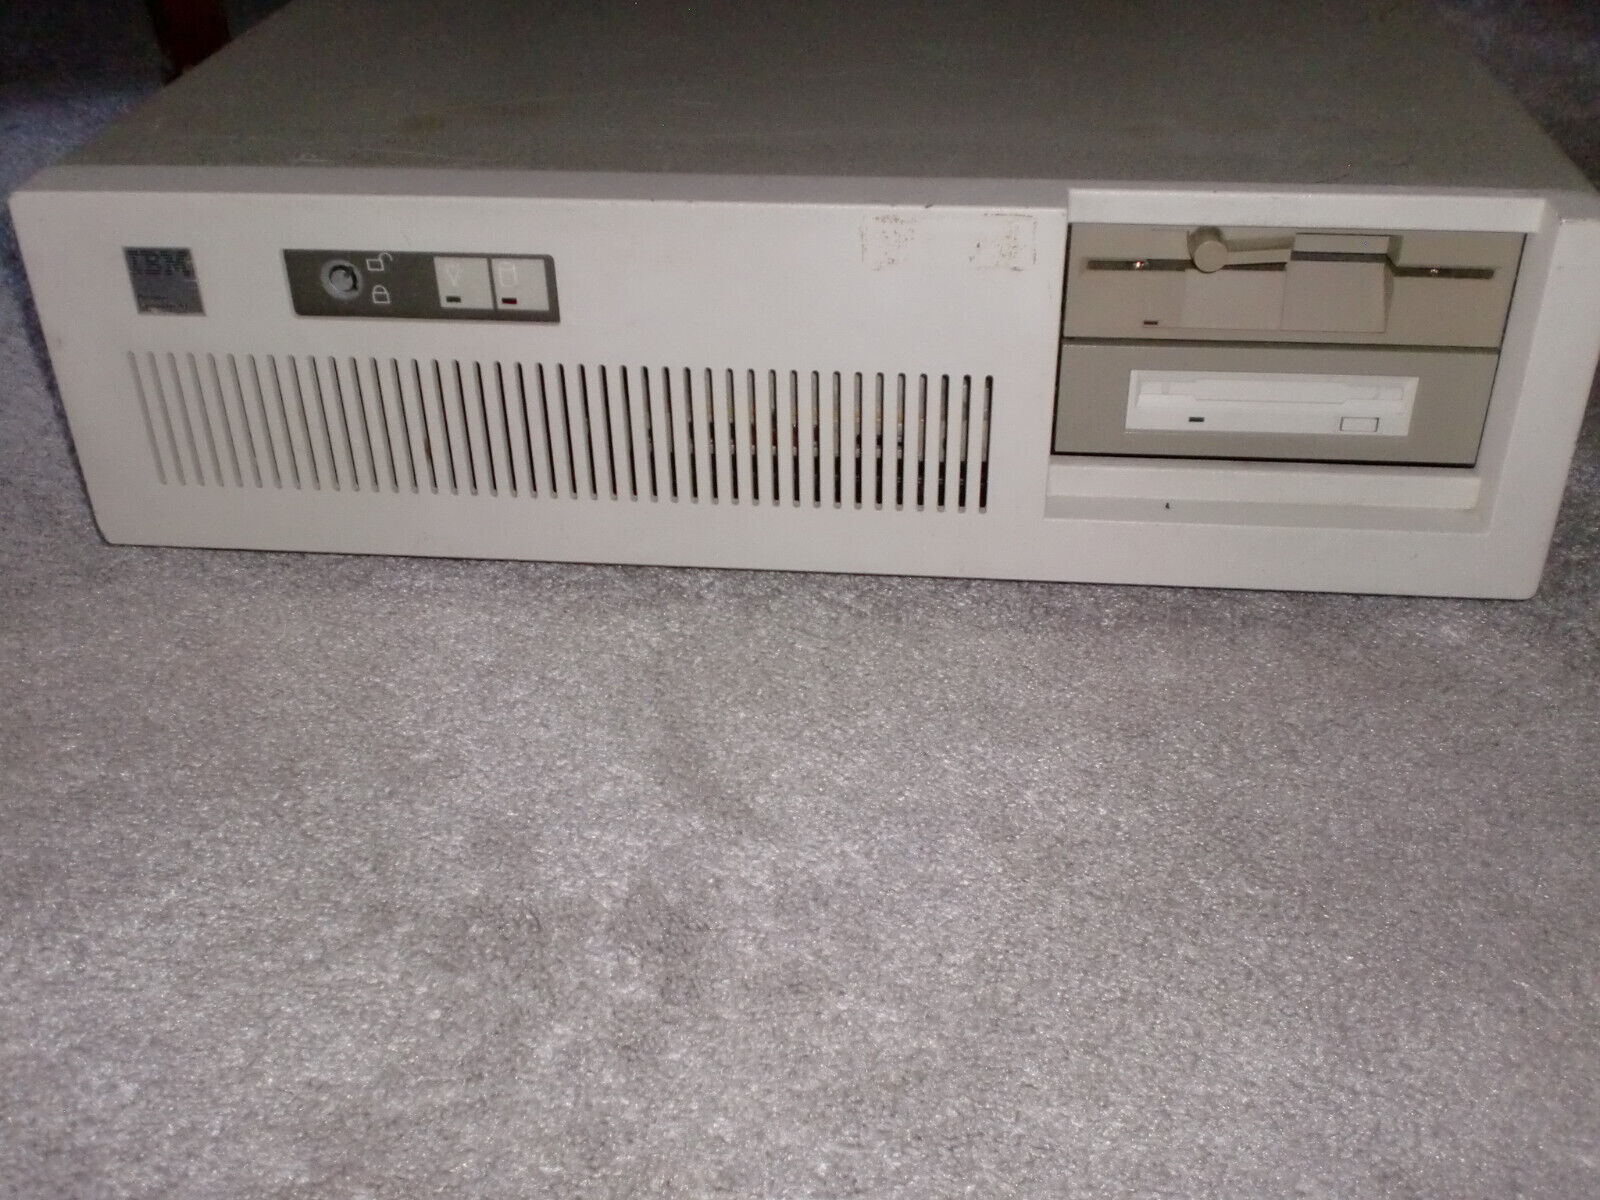 Vintage IBM PC AT 5170 Computer DOS6.22 Still Works Great